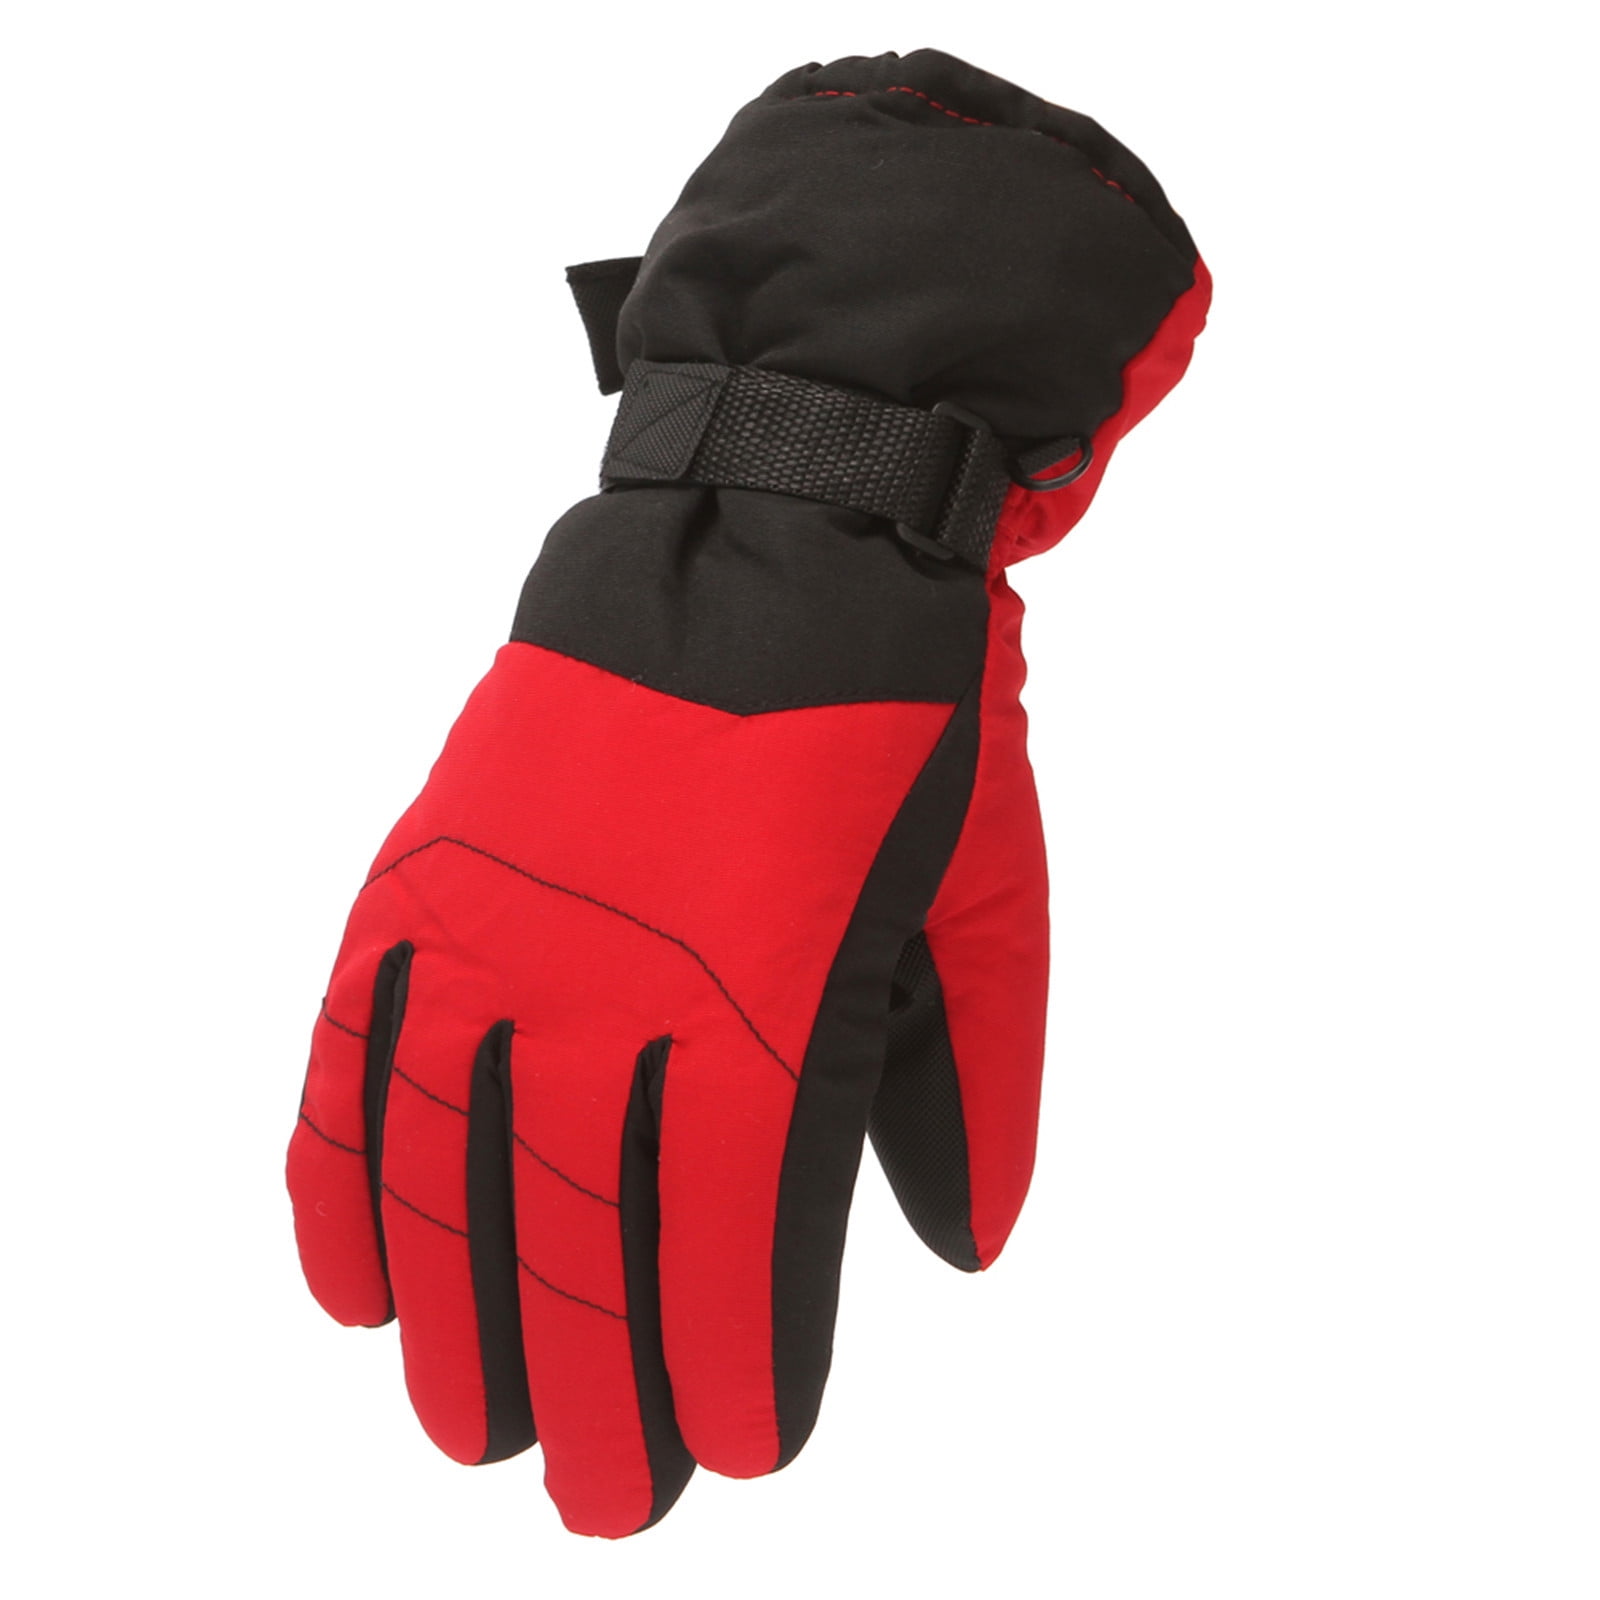 VBIGER Kids Ski Gloves Ski Mittens Waterproof Windproof Winter Gloves,Aged 2-7 